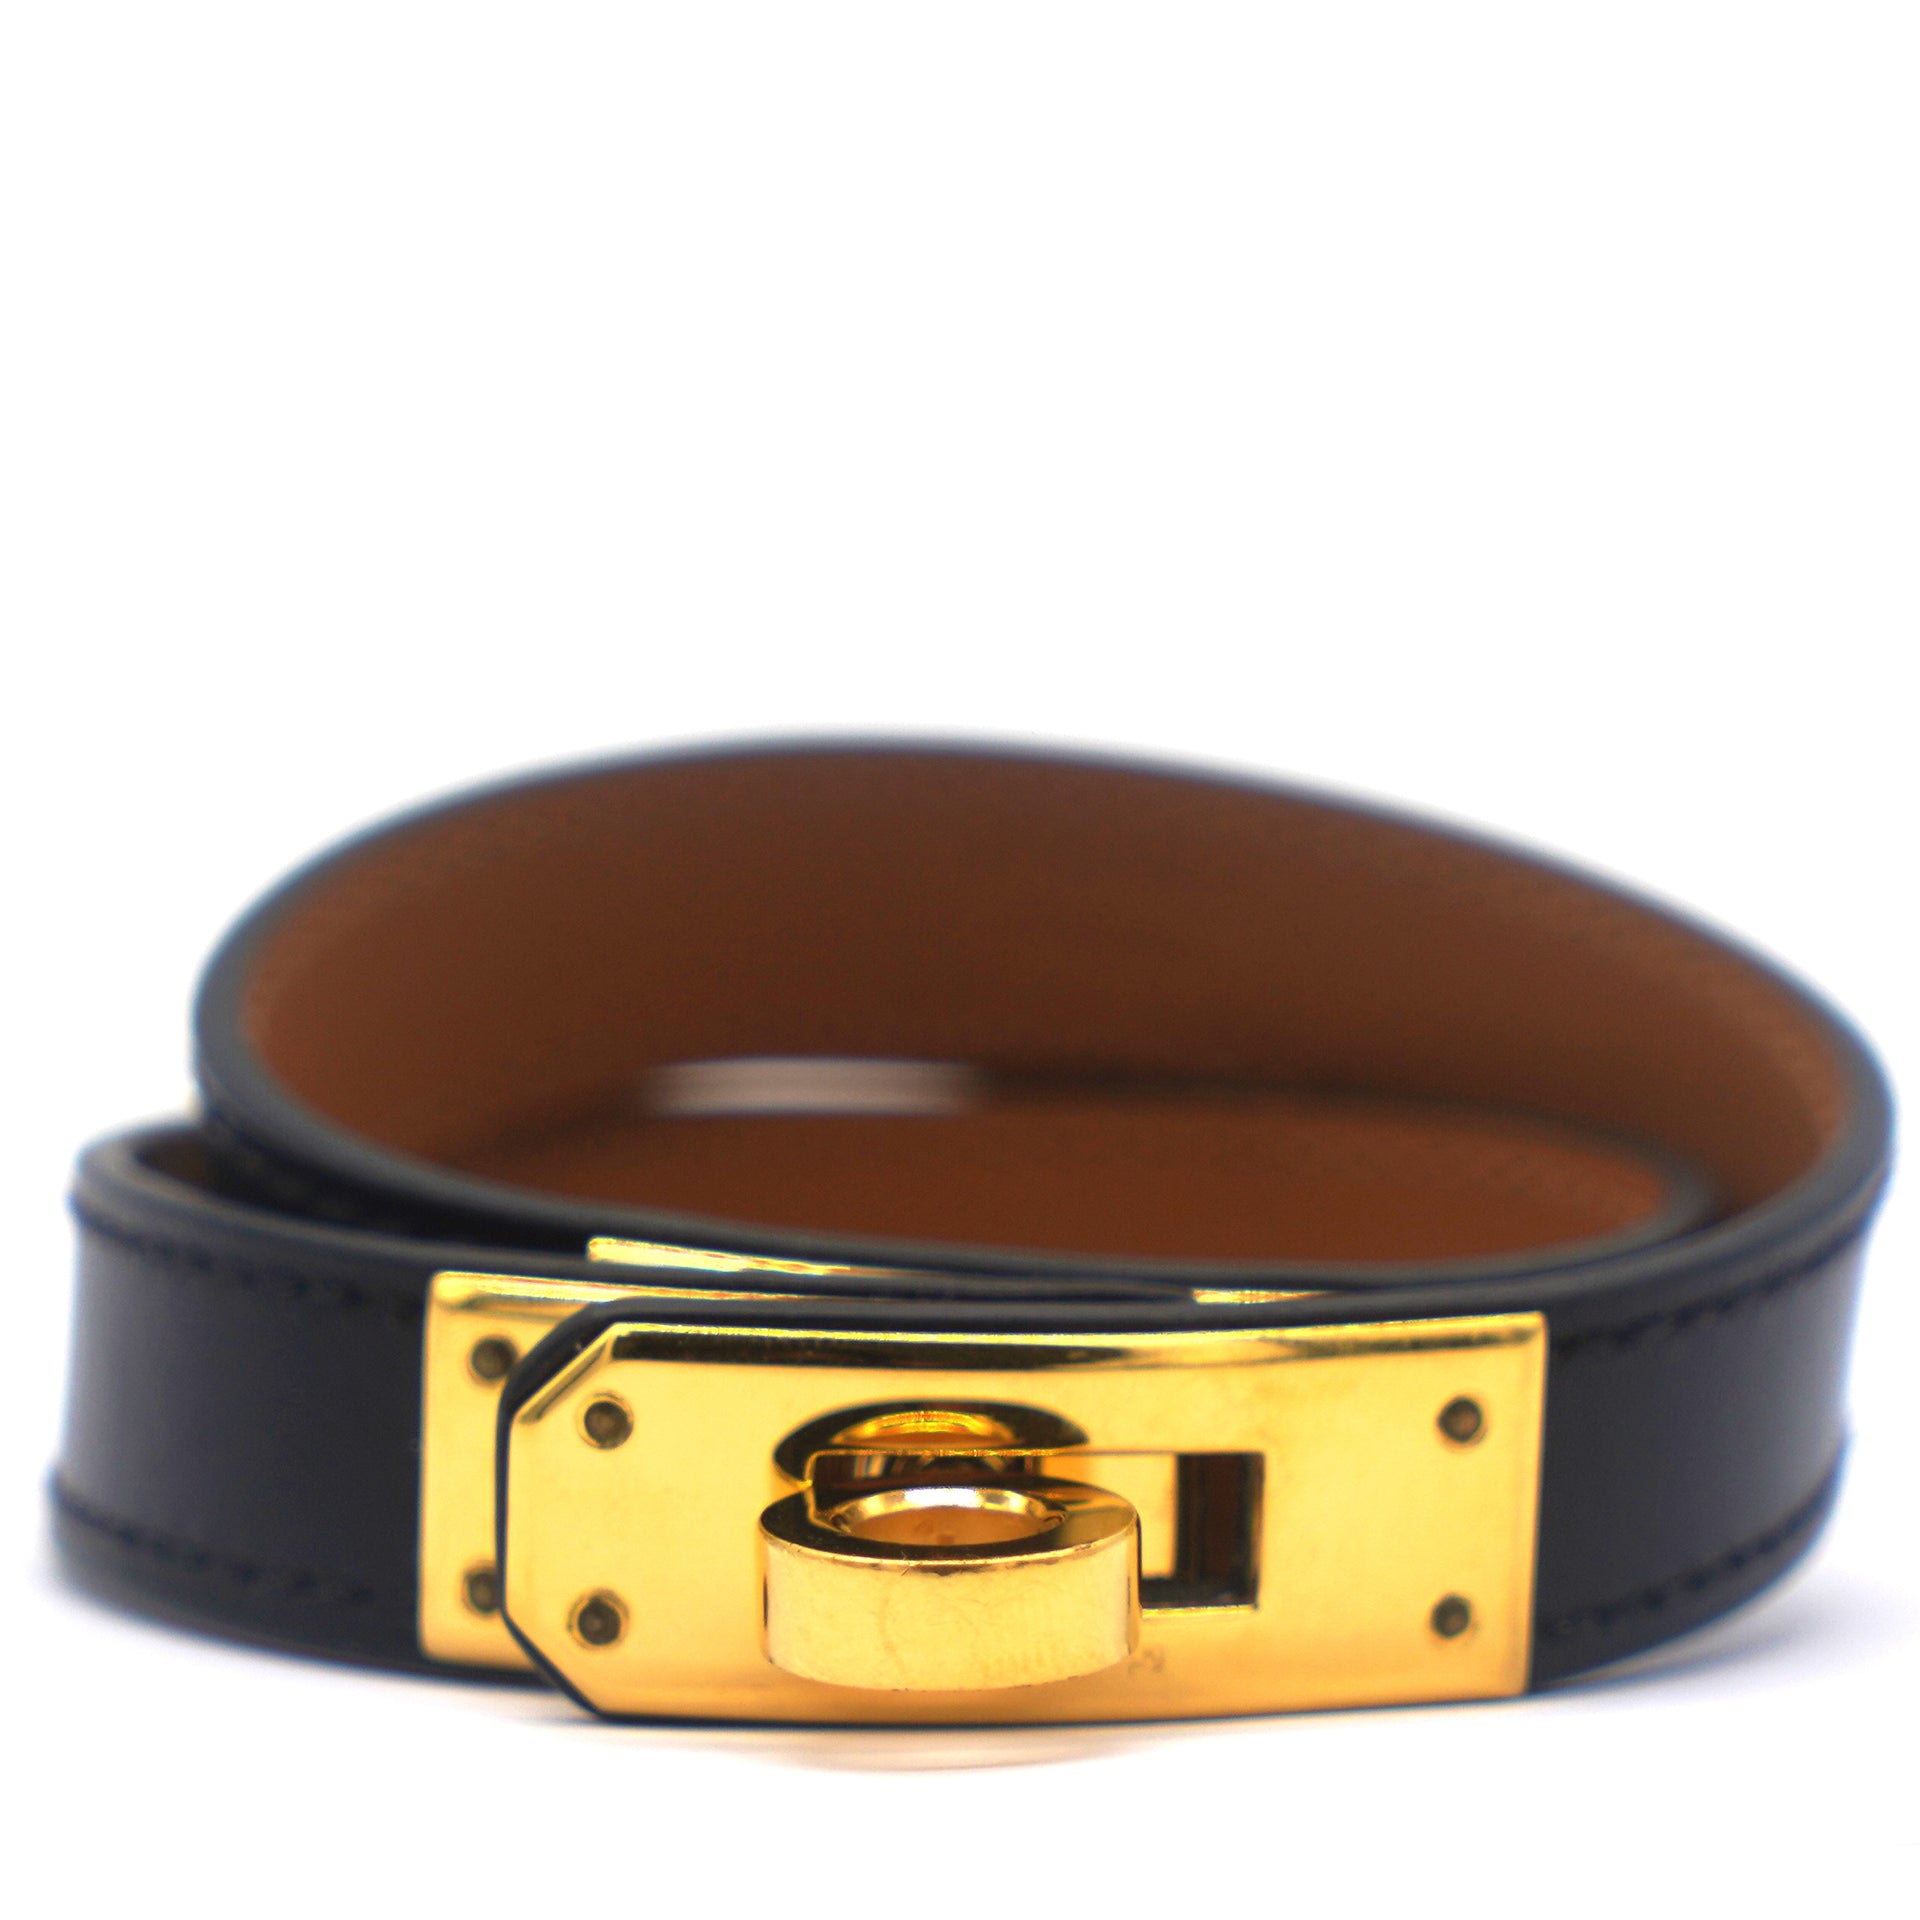 Kelly Double Tour Black Box Leather Yellow Gold-Plated Wrap Bracelet